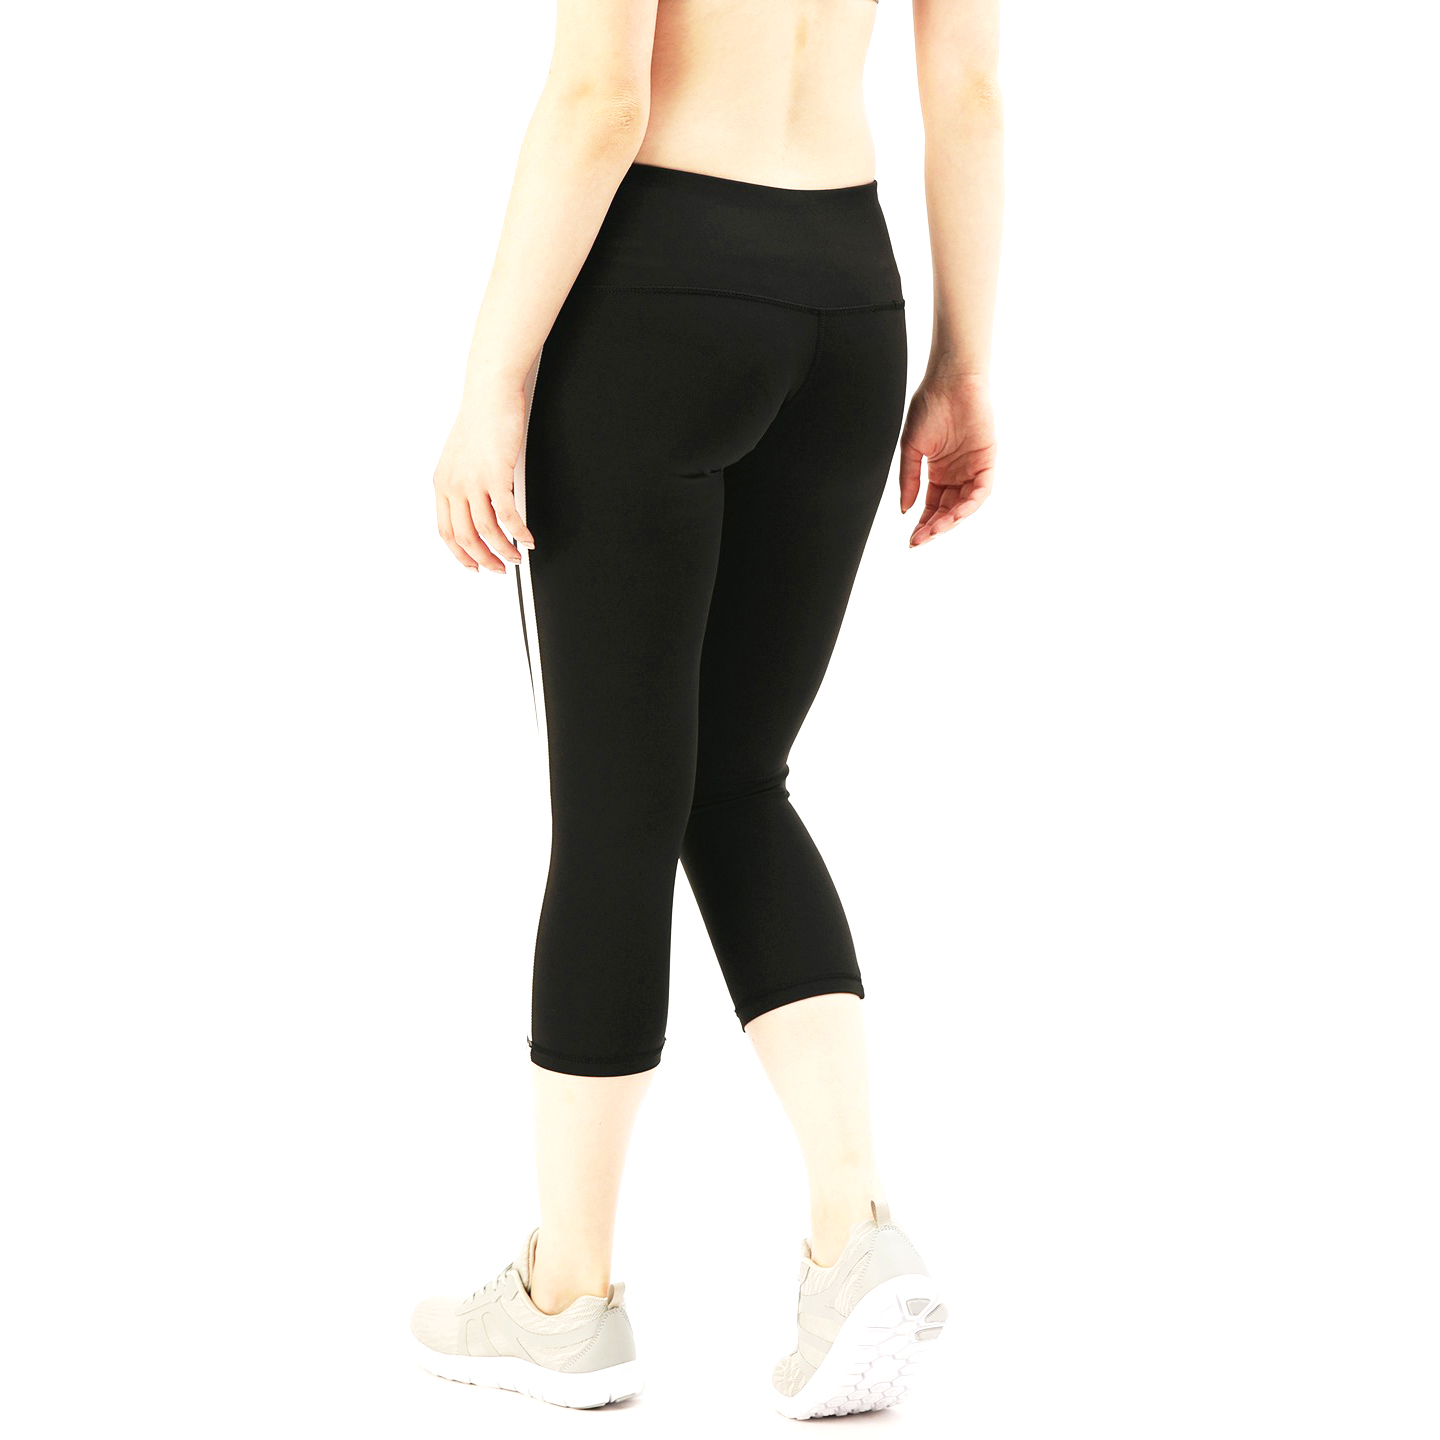 Solid Black Side Striped Yoga Capri Pants